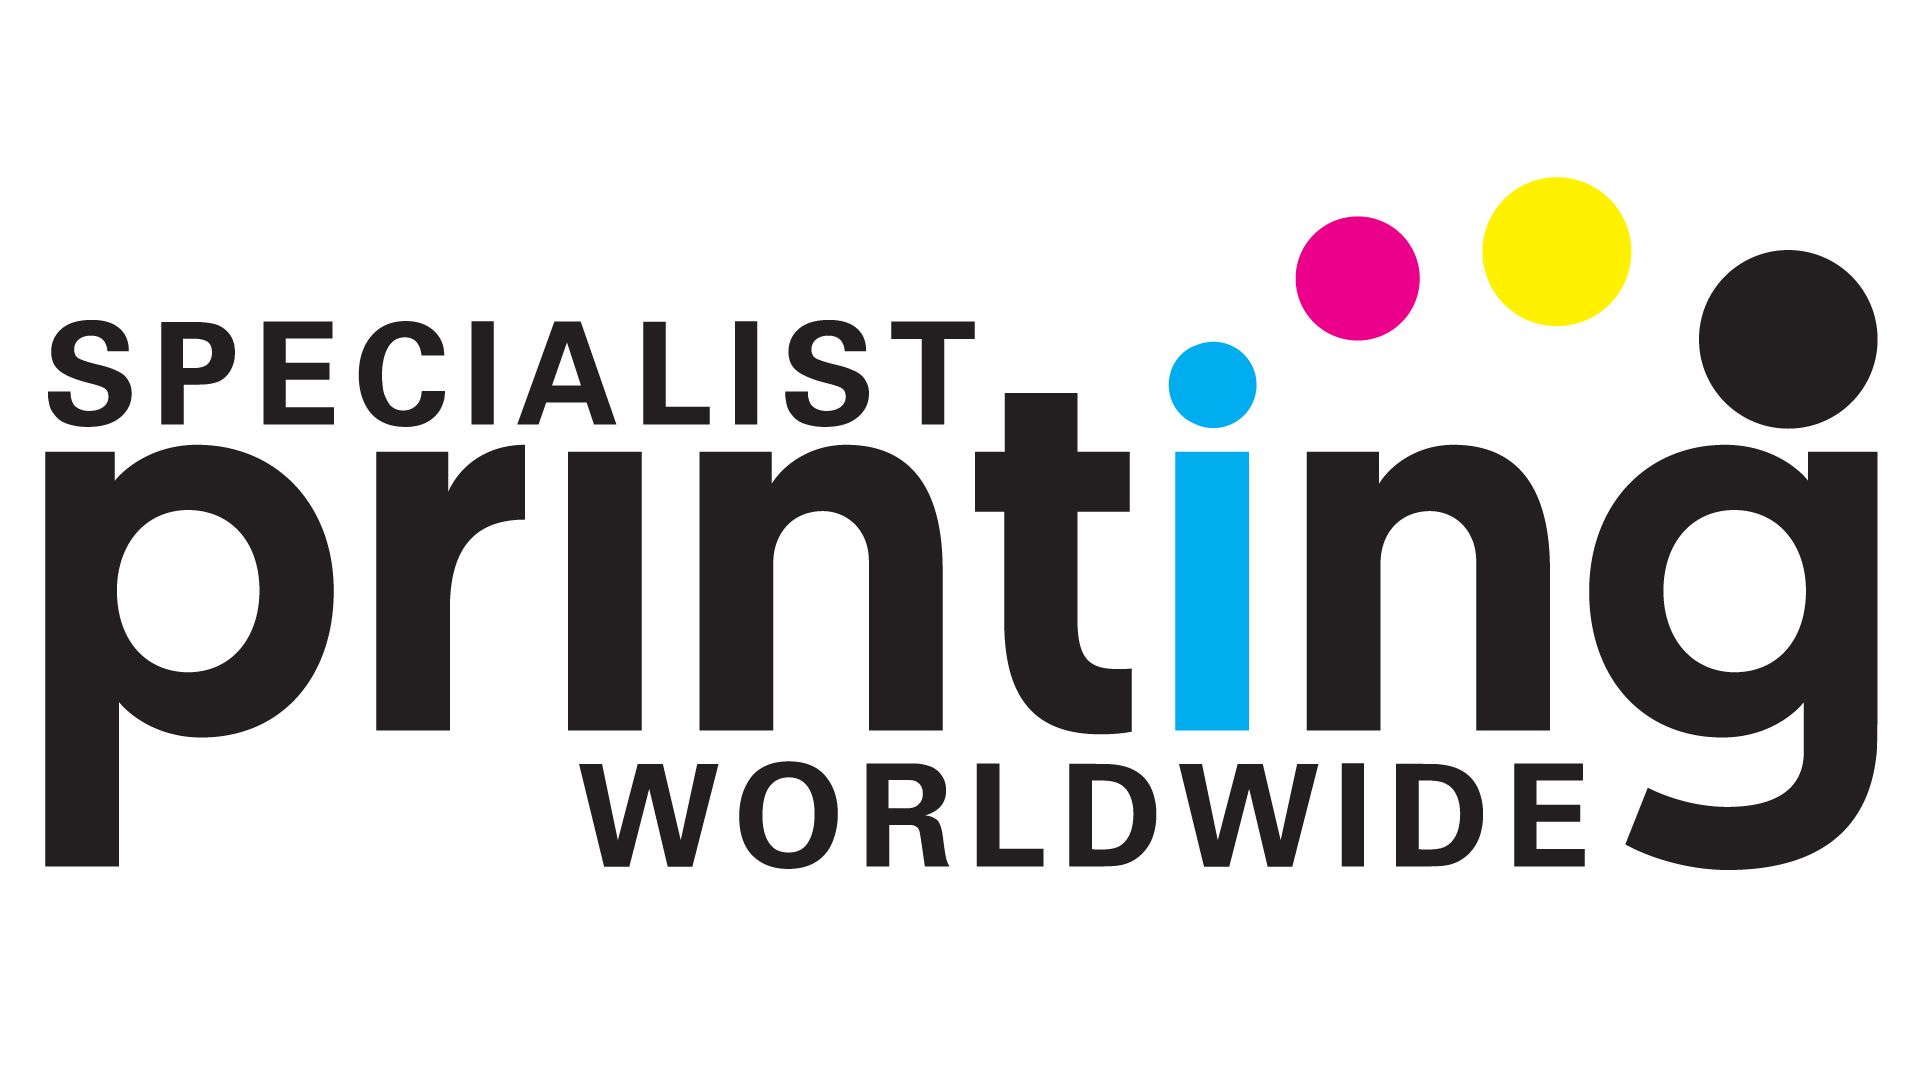 Specialist printing worldwide